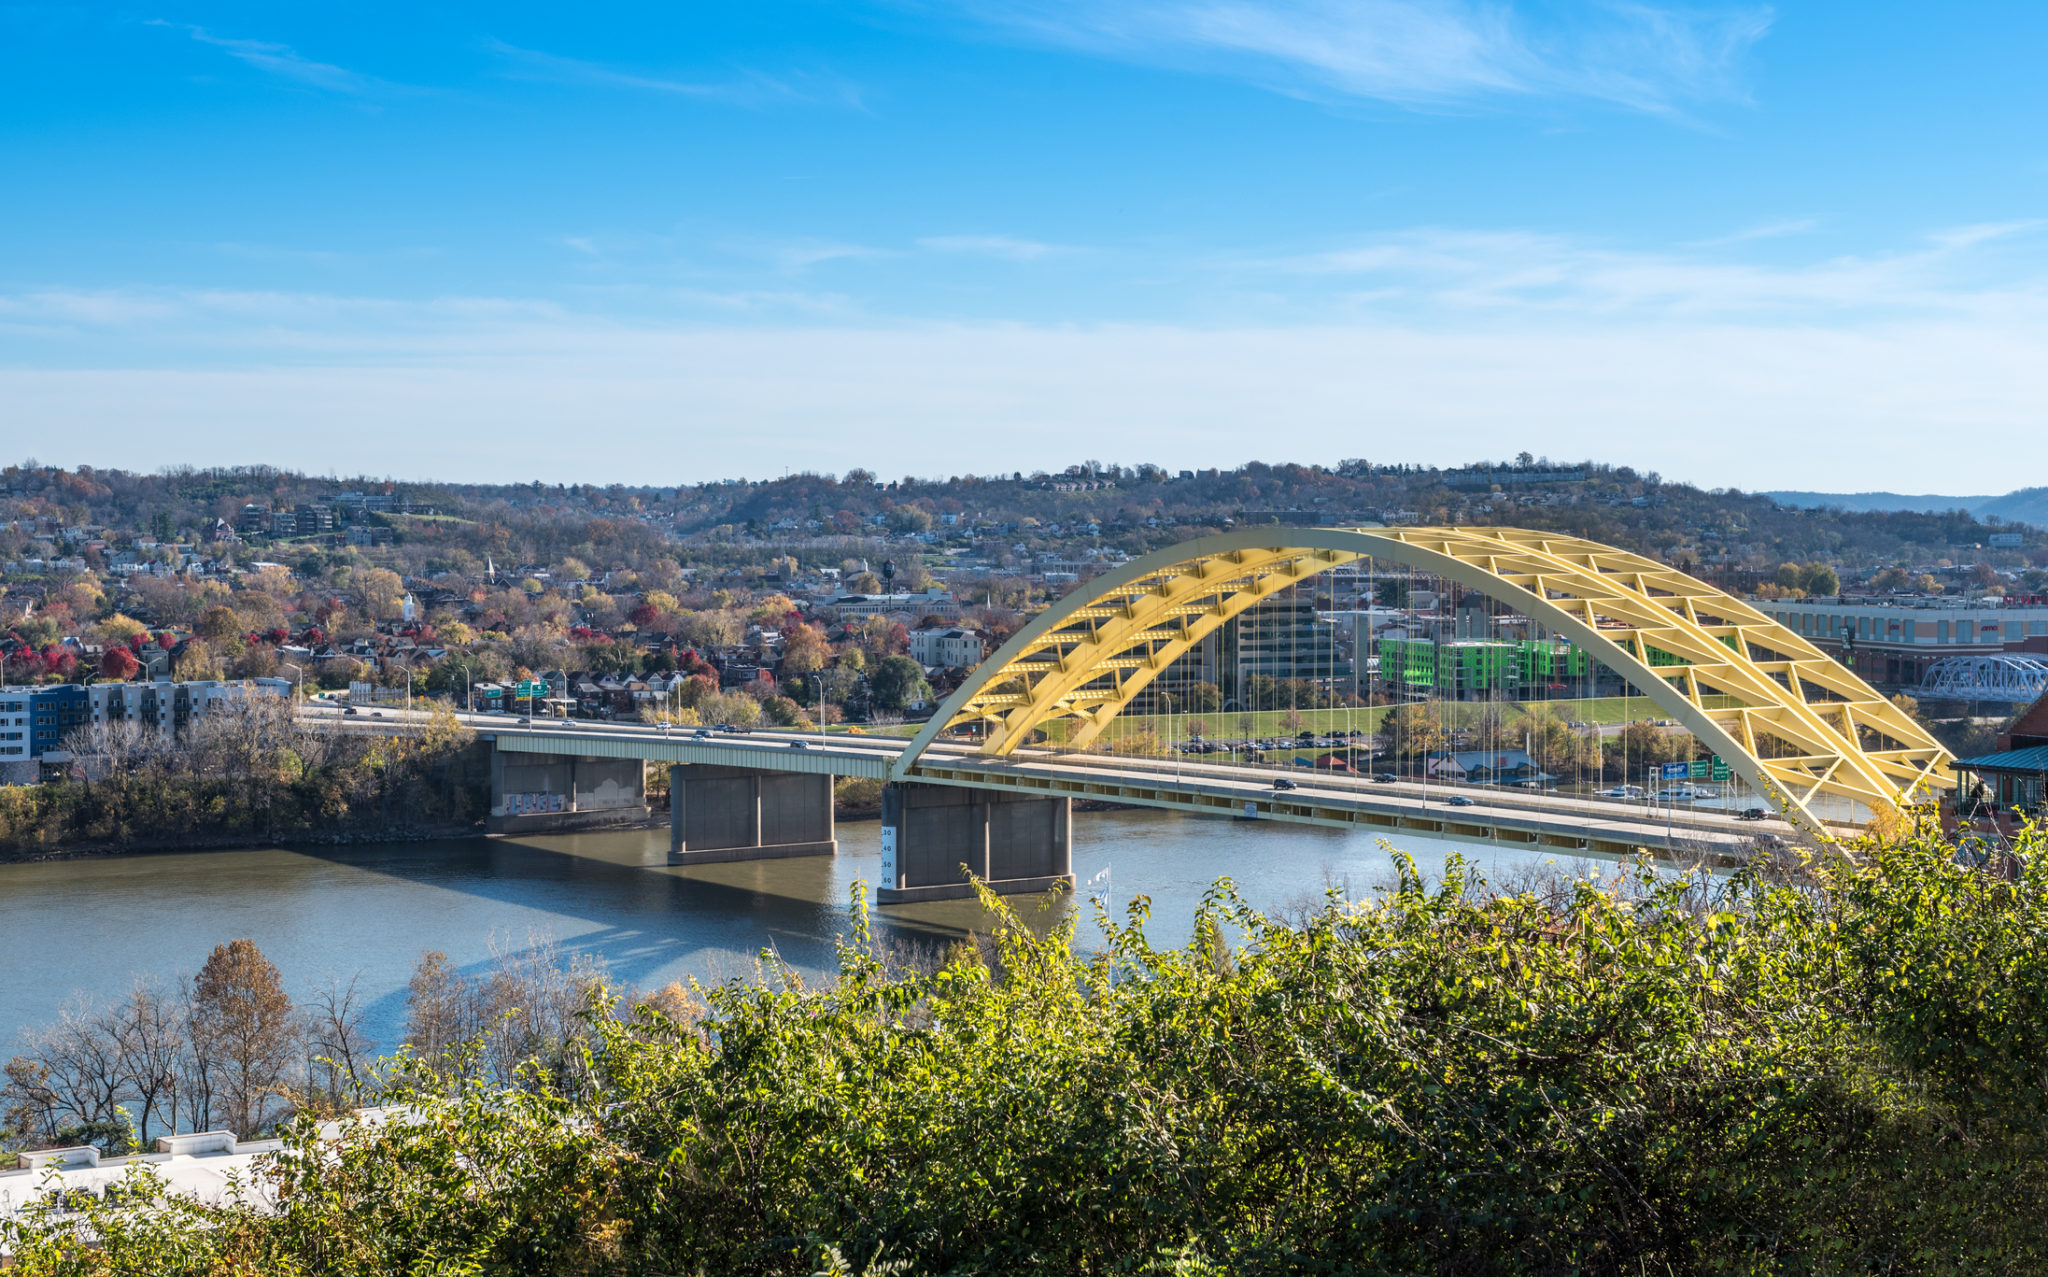 Landscape scene depicting the Daniel Carter Beard Bridge in Cincinnati, Ohio